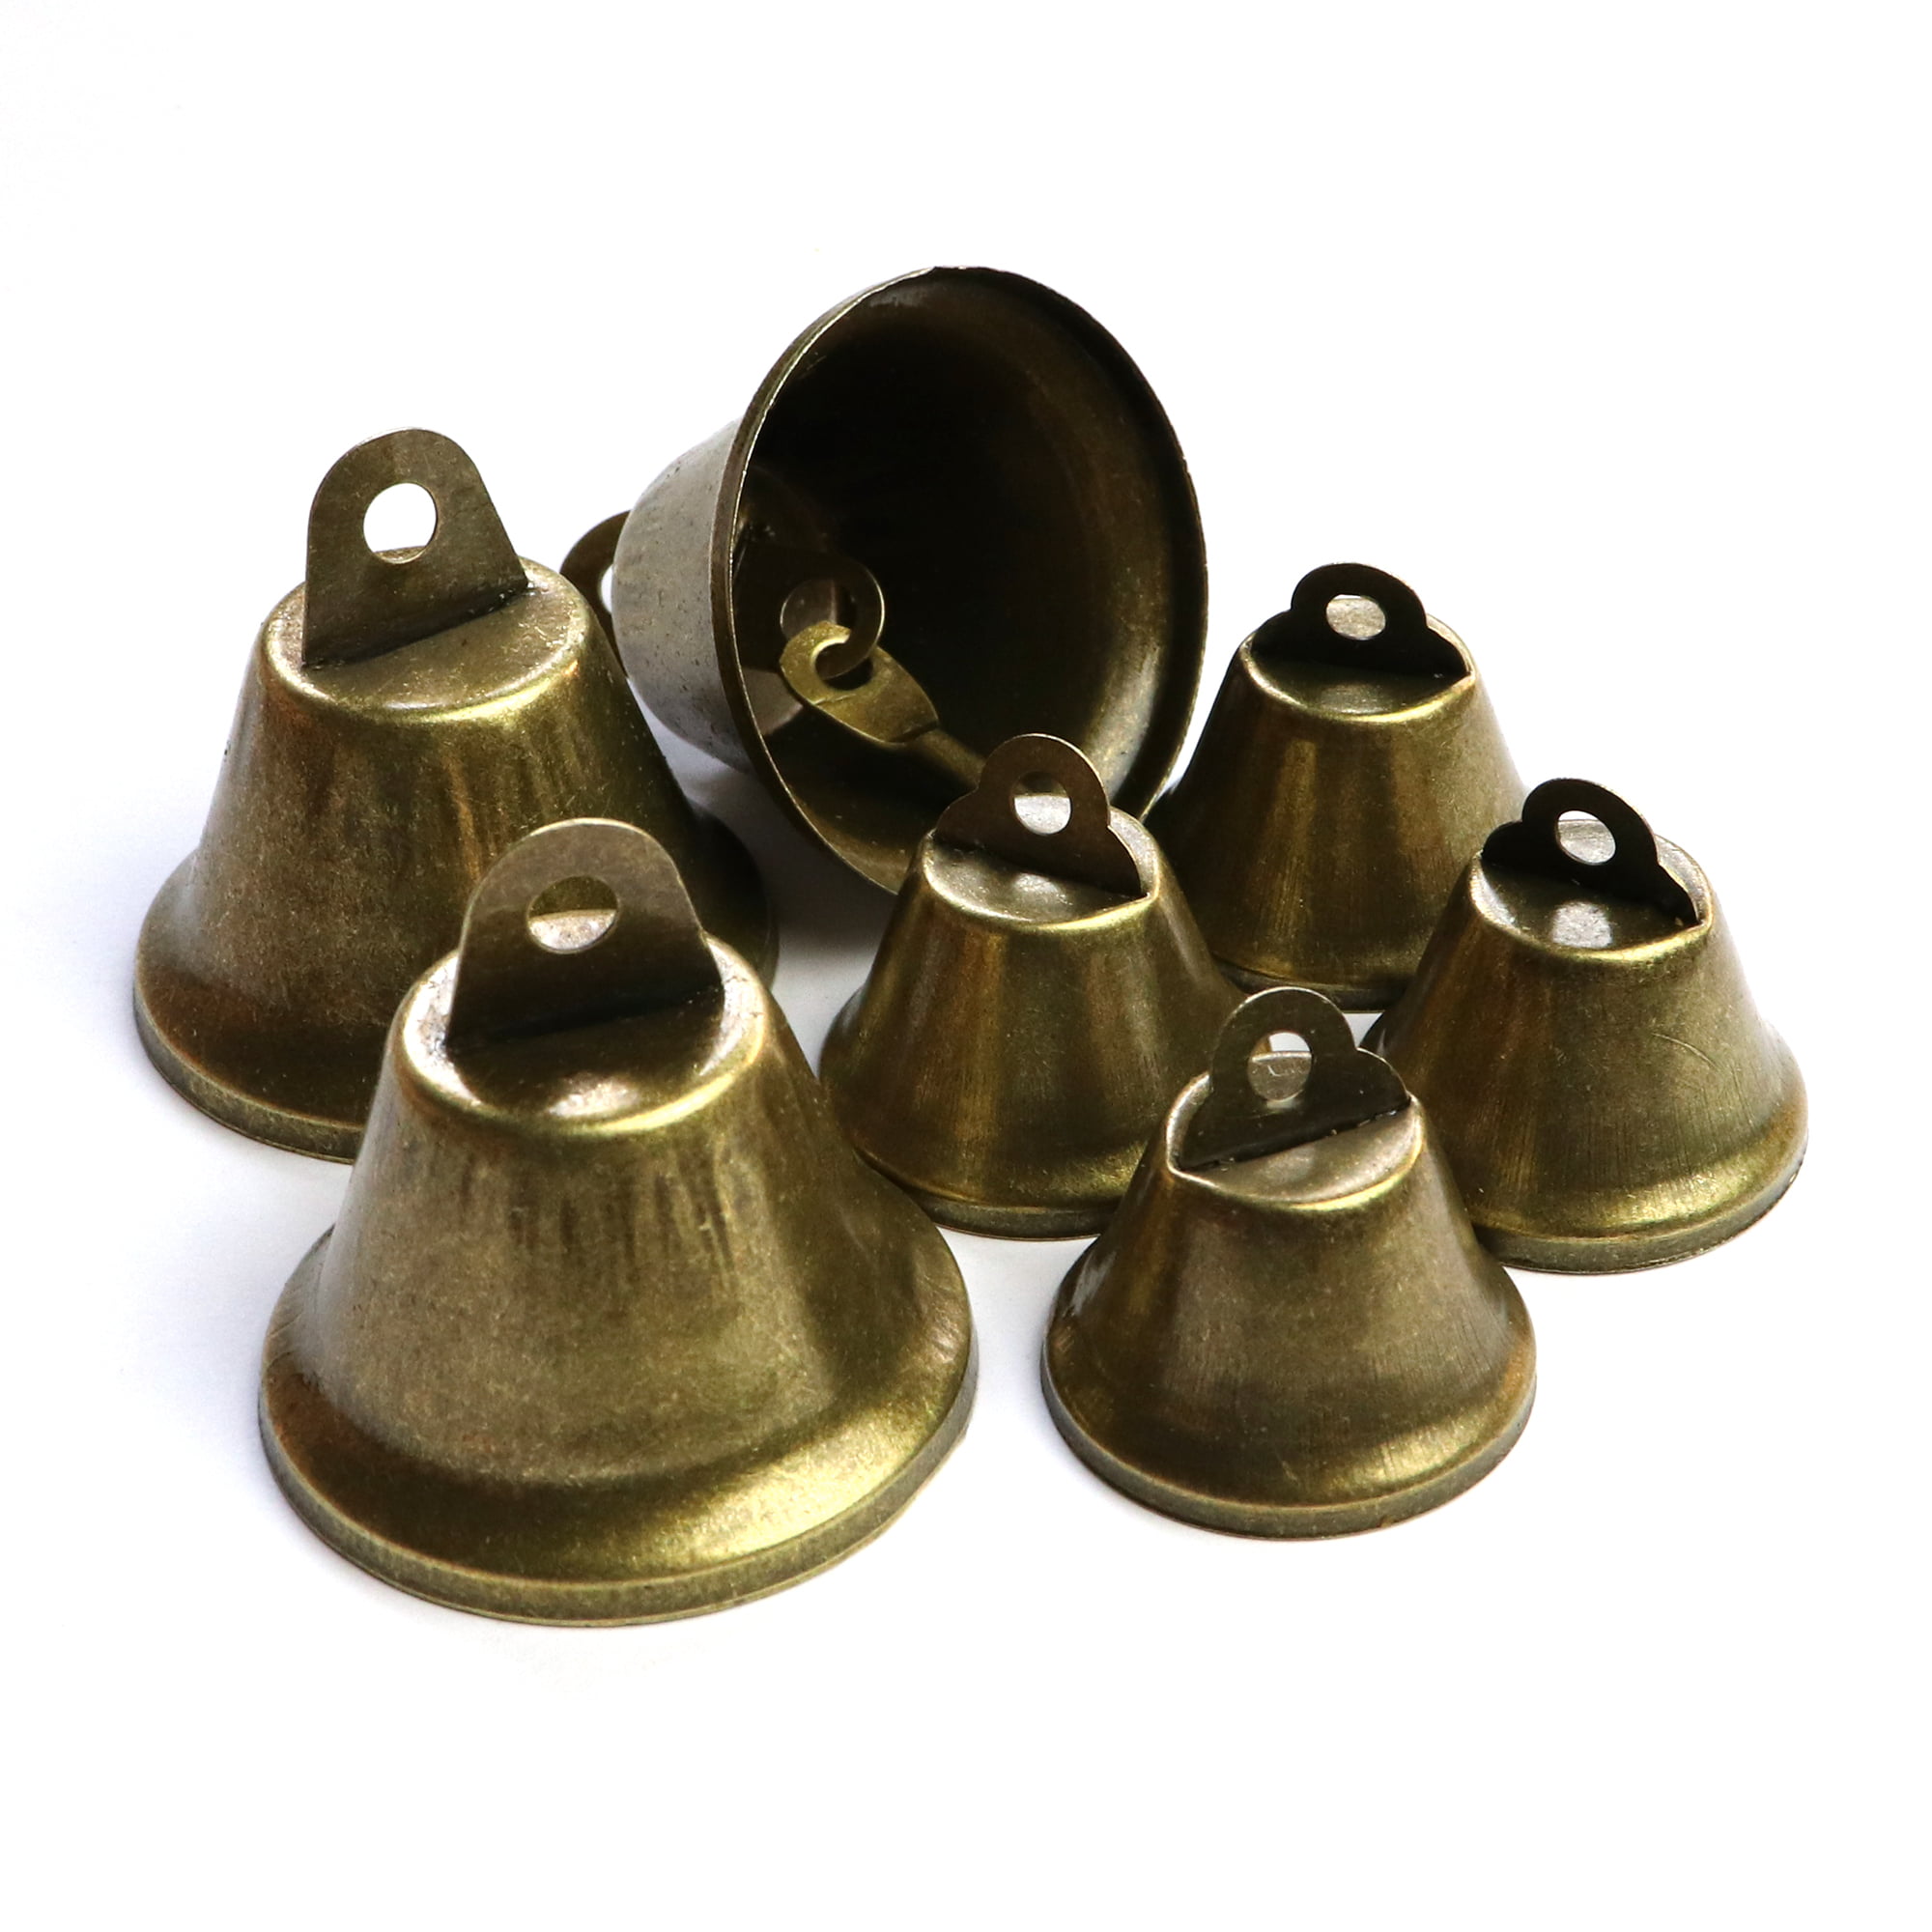 Buy 25 Bells for Crafting, 1-1/4 X 1-1/8 Inch GOLD Wedding Bells